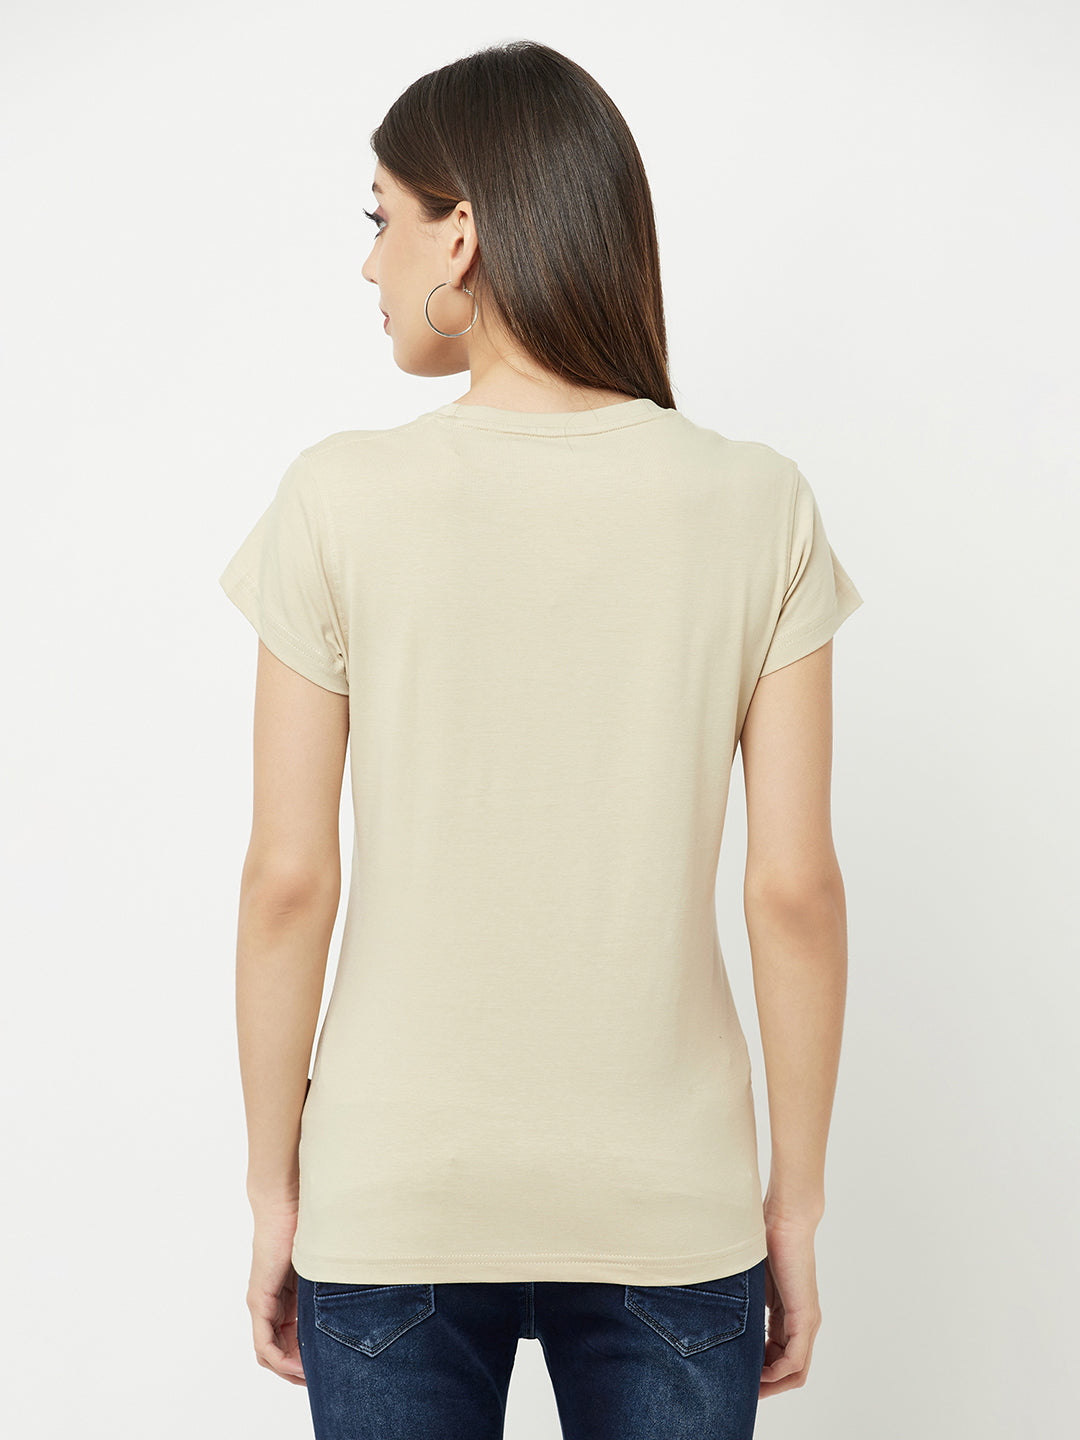 Beige Graphic Printed Round Neck T-Shirt - Women T-Shirts